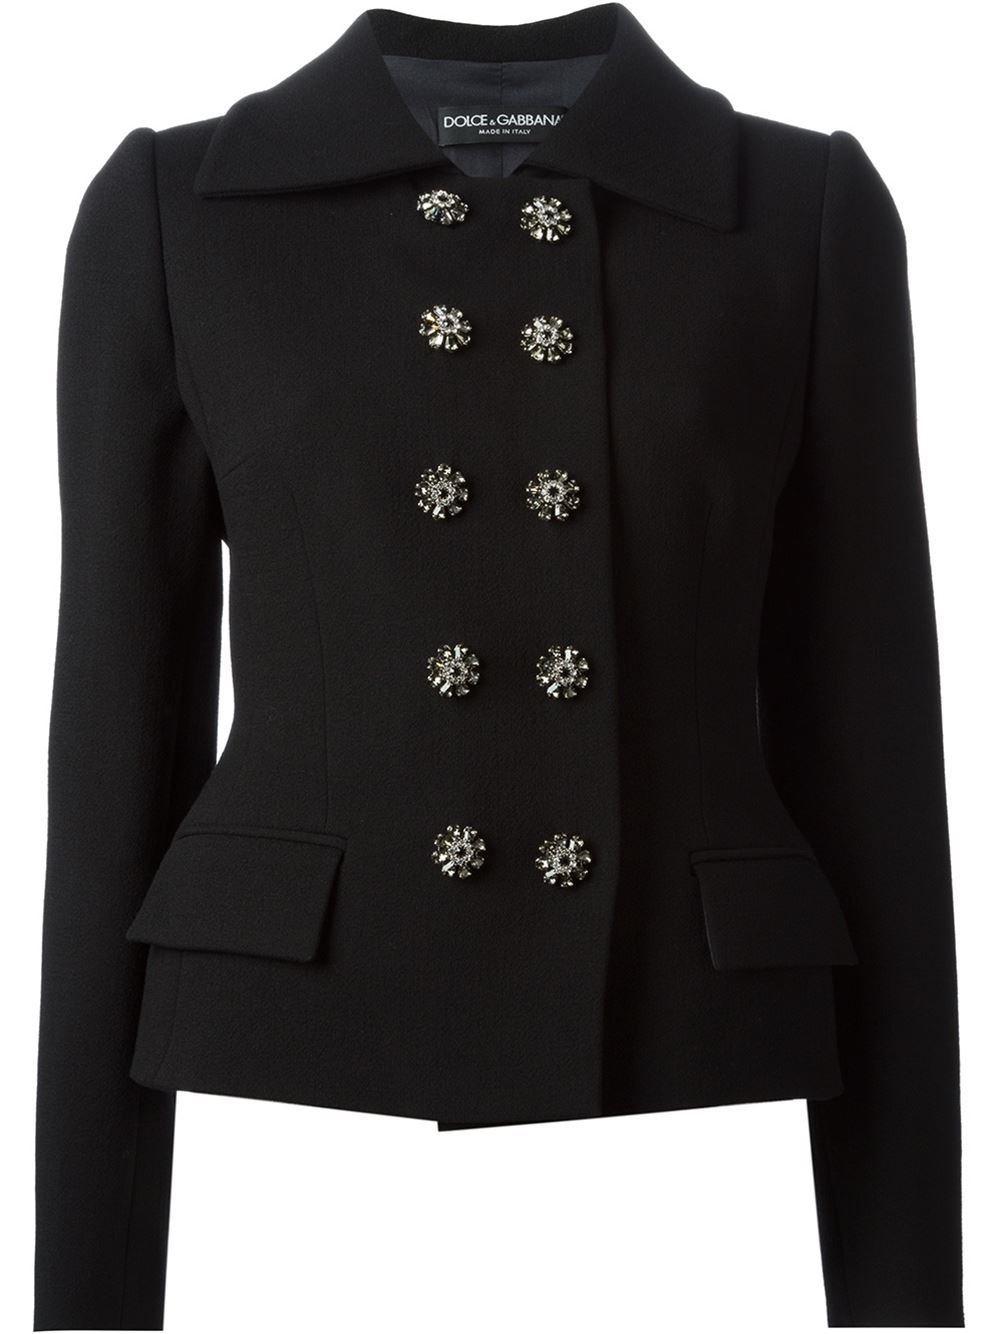 Dolce & Gabbana Jewel Buttons Short Coat in Black - Lyst